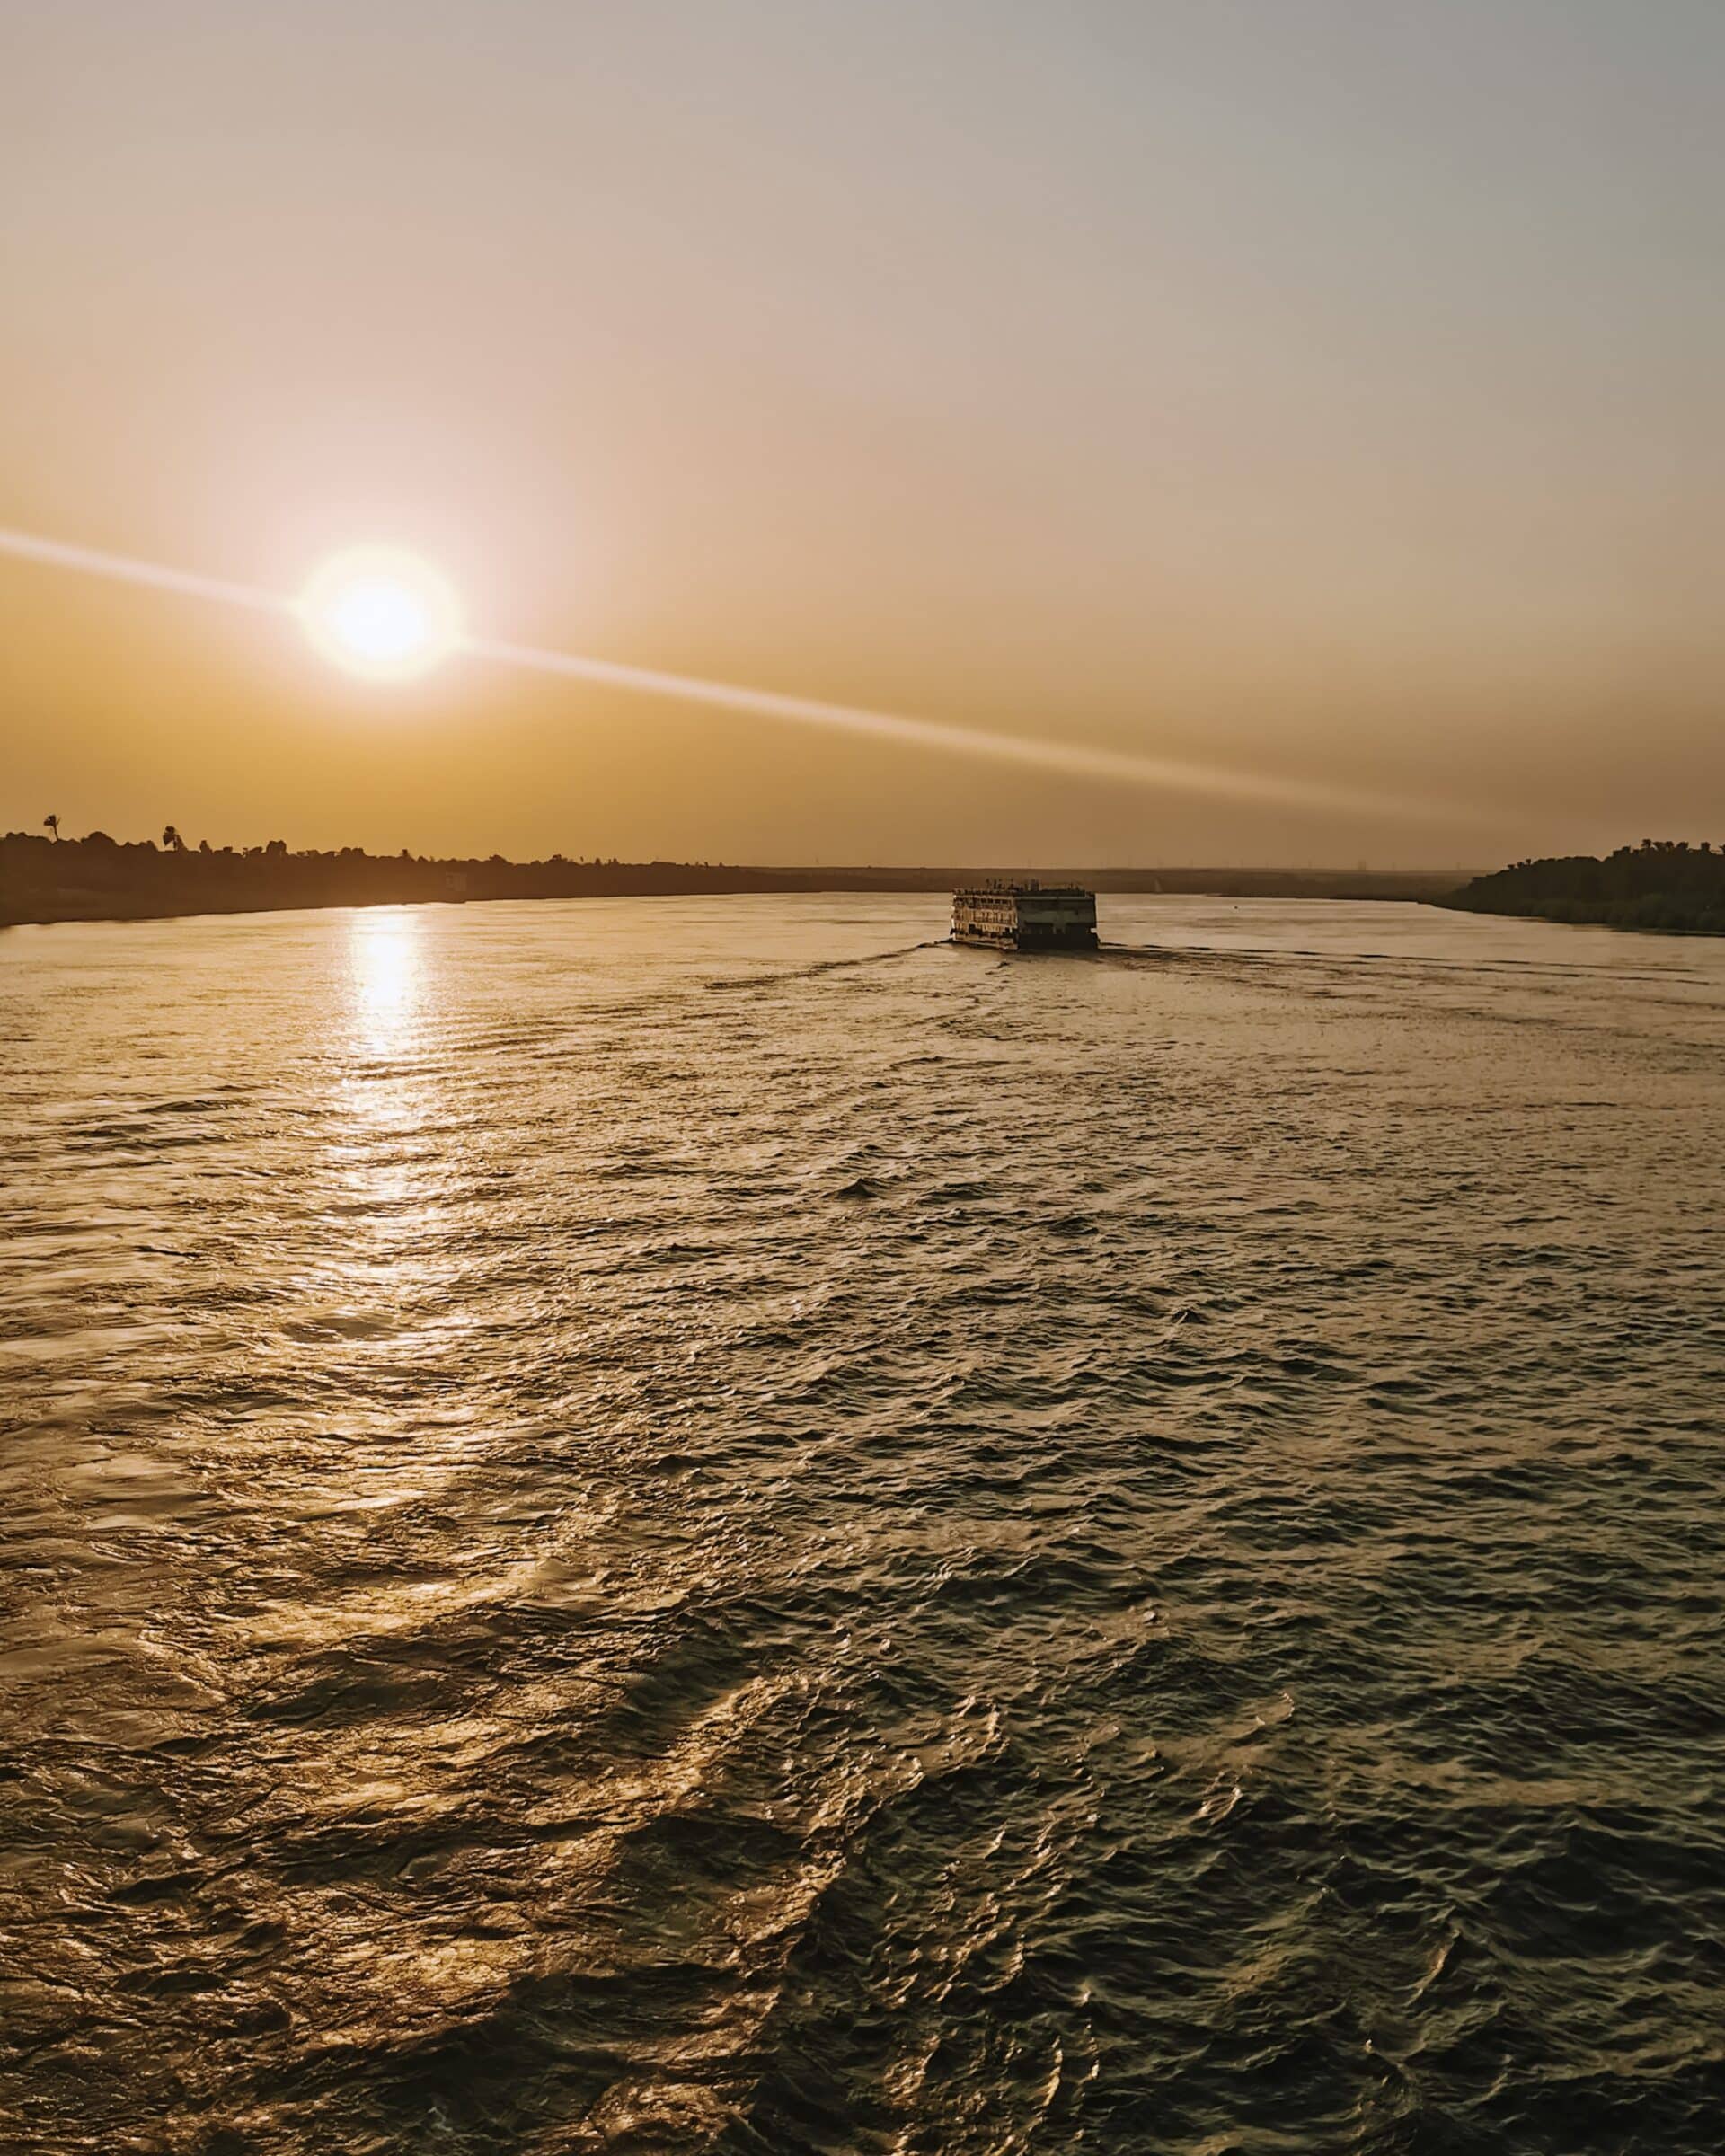 Plovidba Nilom u zalazak sunca | Krstarenje Nilom Egiptom